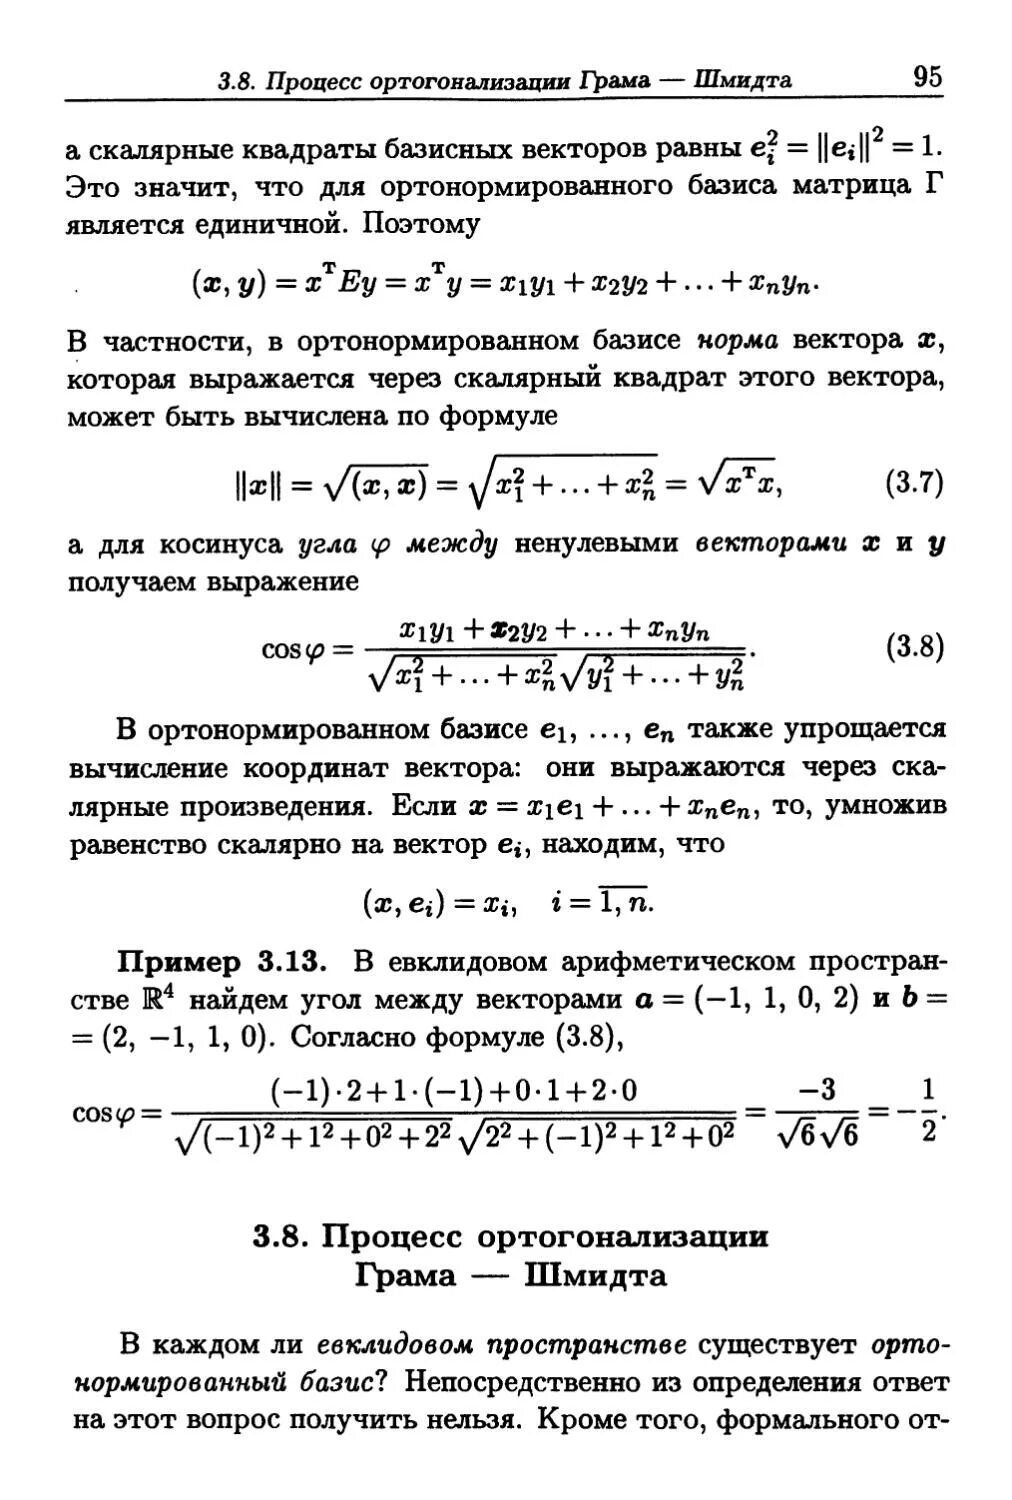 Ортогонализация грама-Шмидта. Пример ортогонализации грамма-Шмидта. Ортогонализация грама-Шмидта формула. Процесс ортогонализации формула.